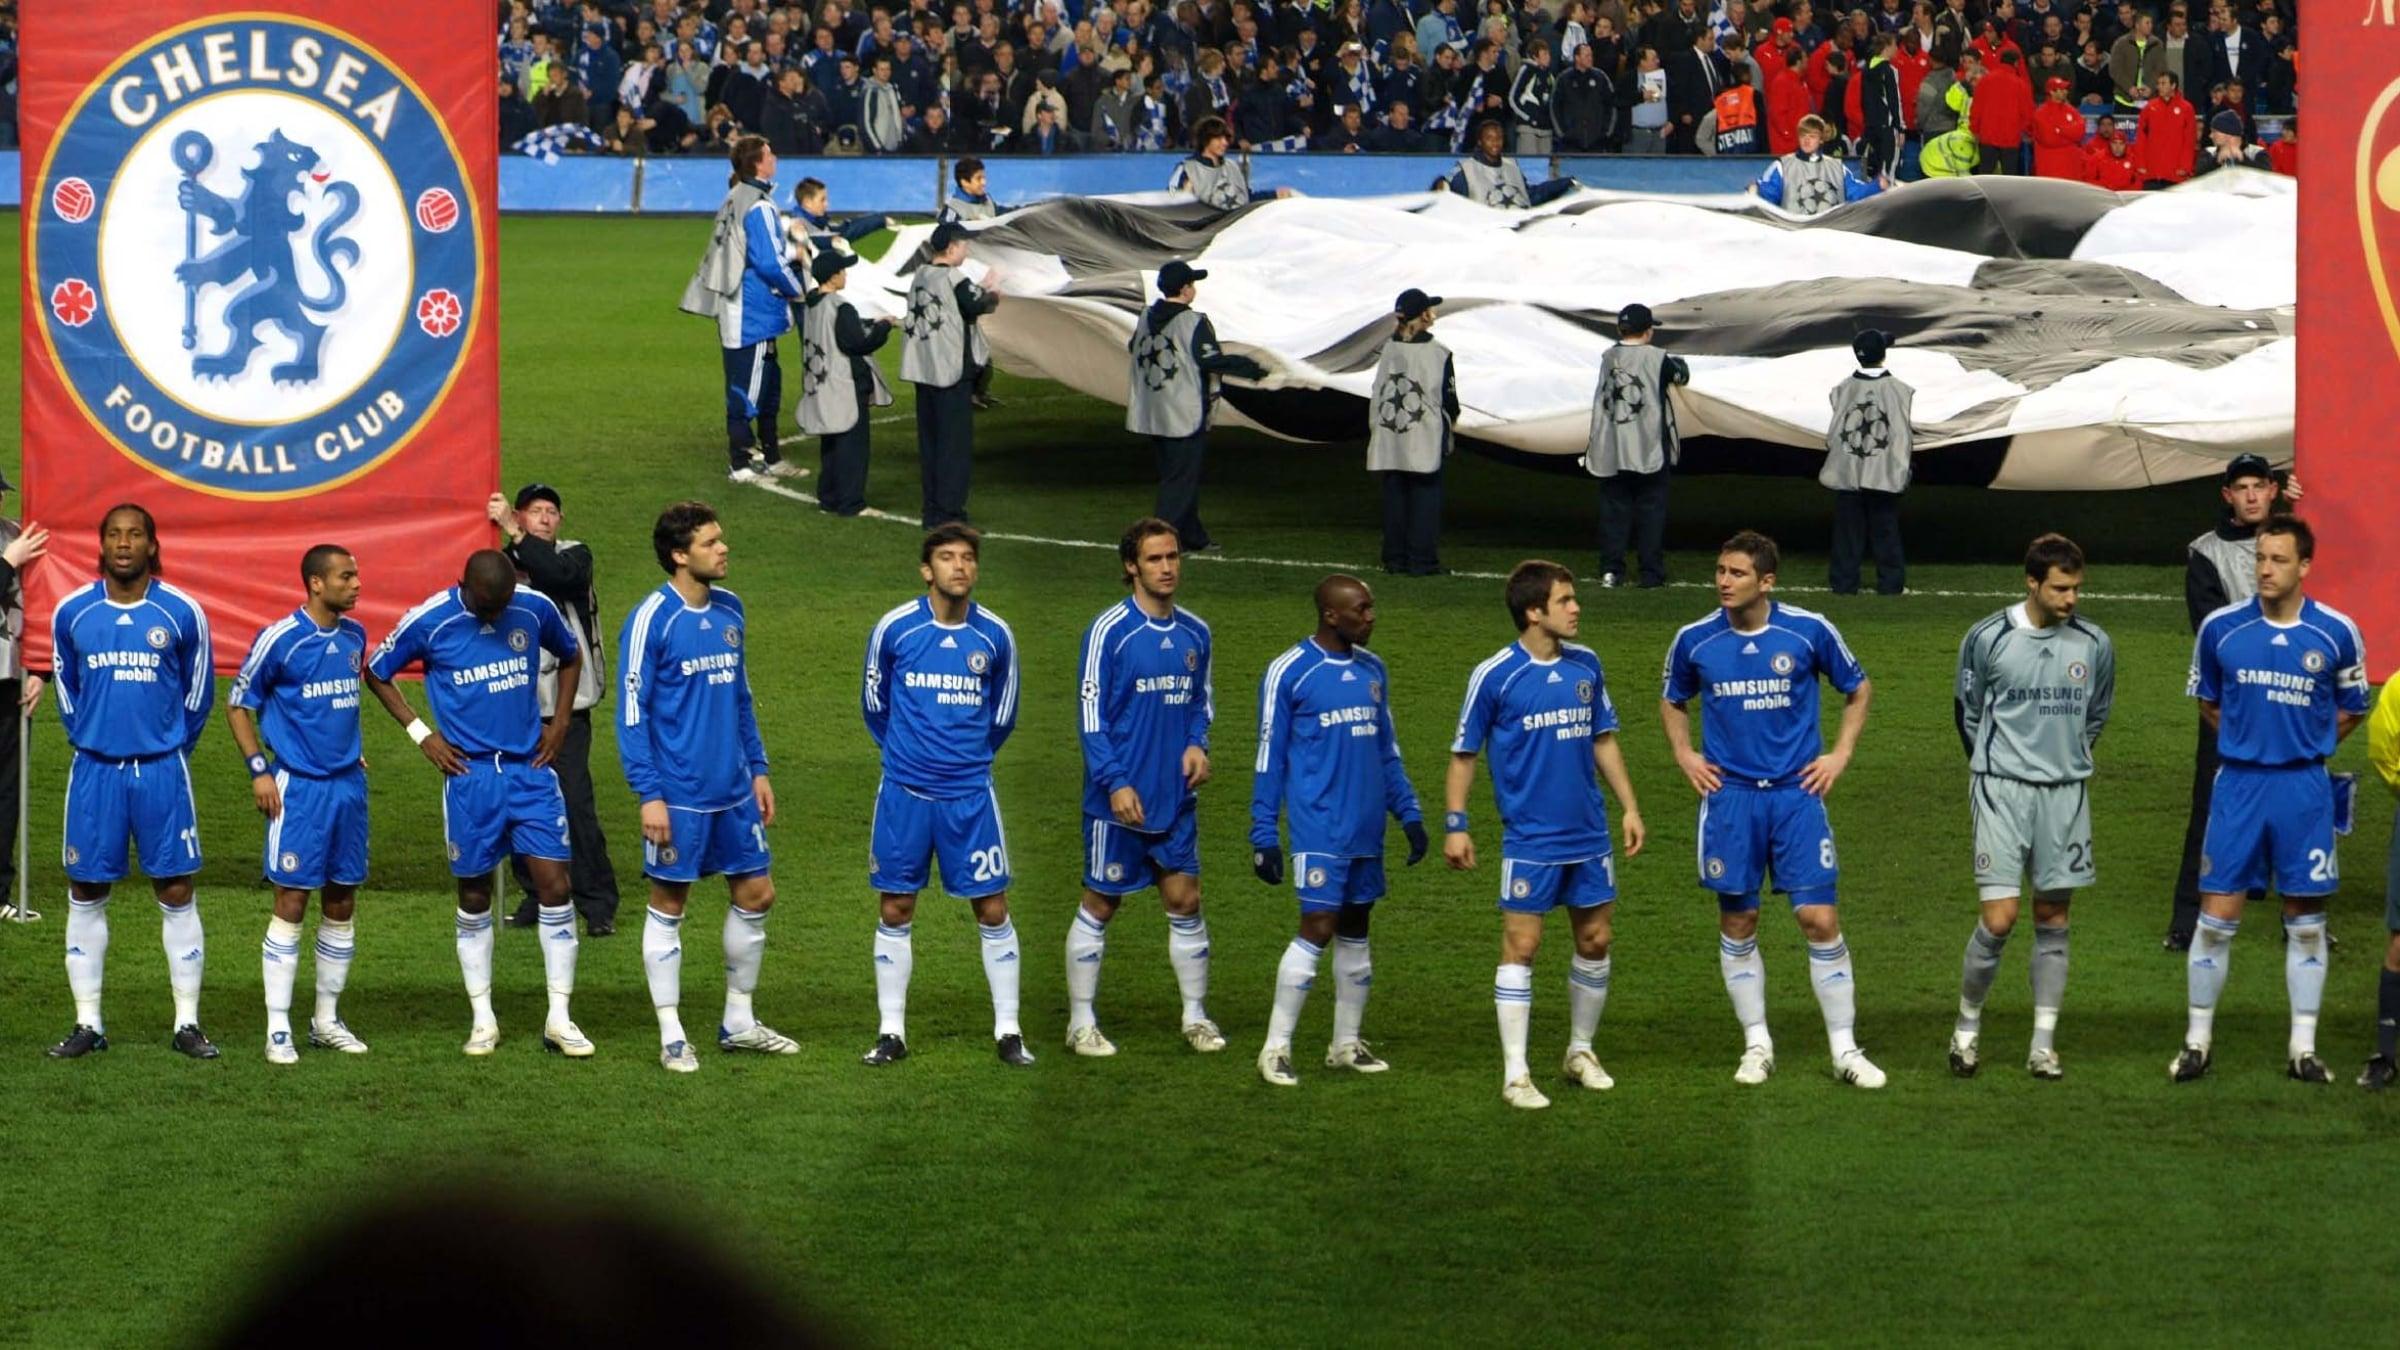 Chelsea FC - Season Review 2007/08 backdrop